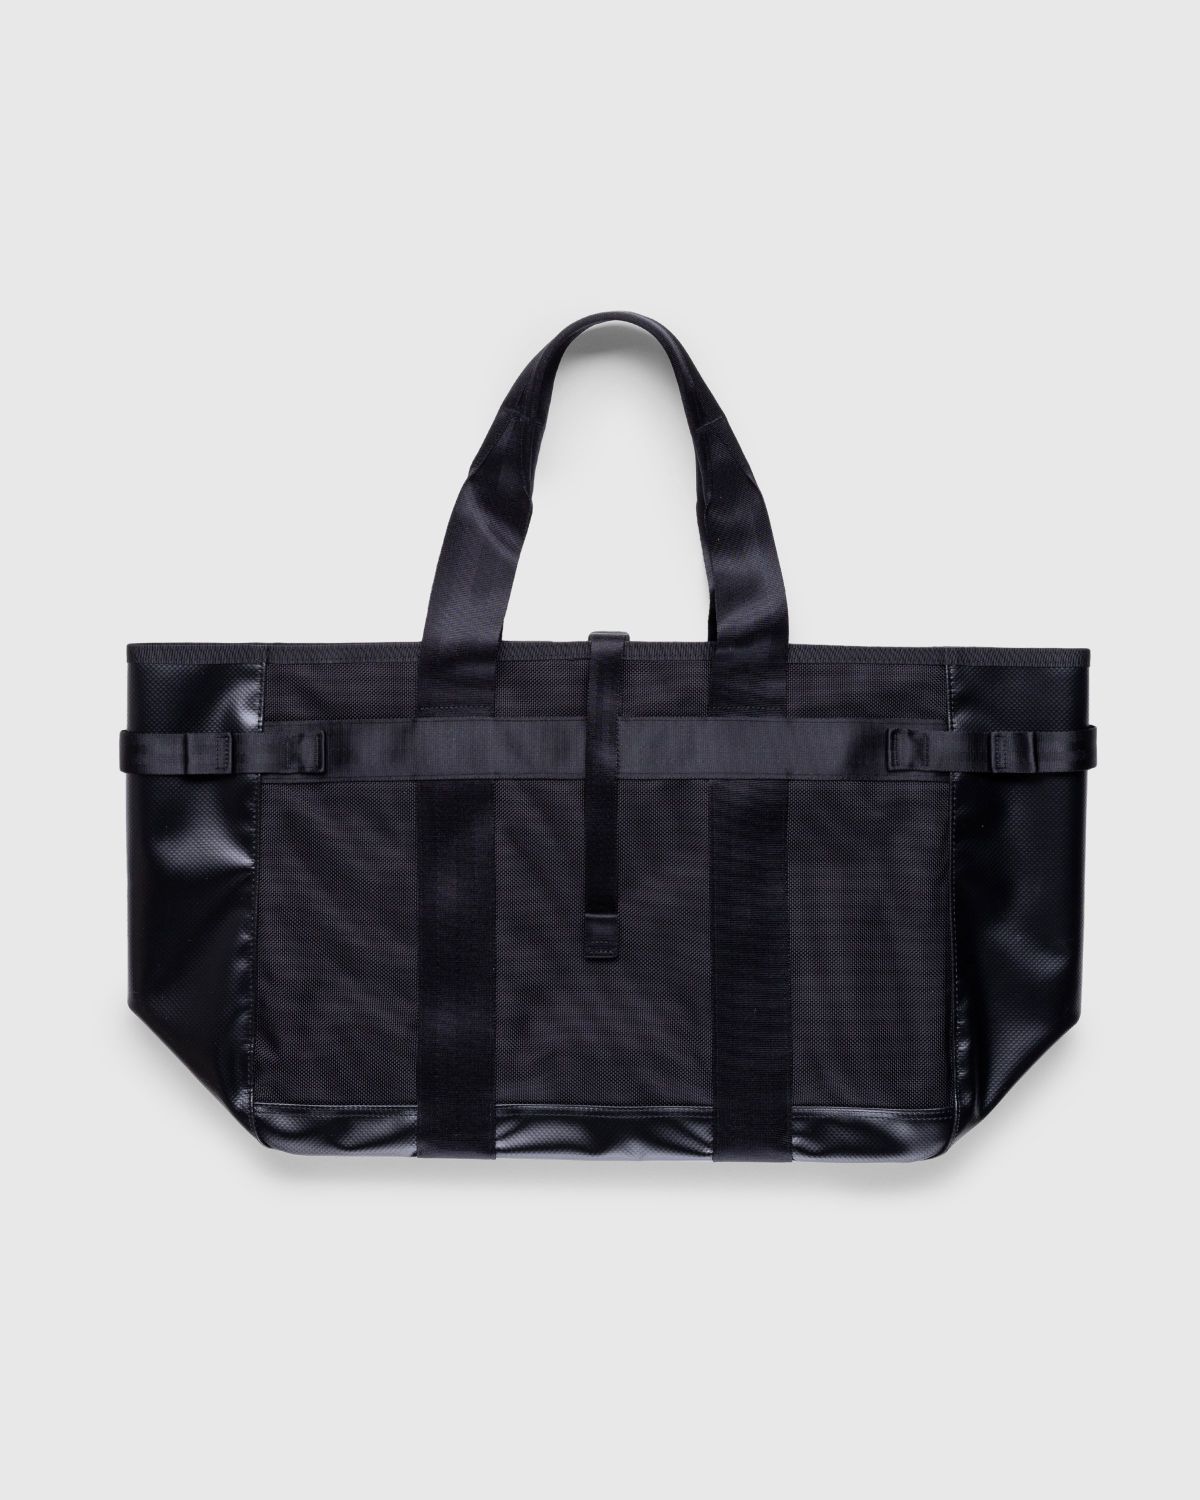 Porter-Yoshida & Co. – Heat Tote Bag Black